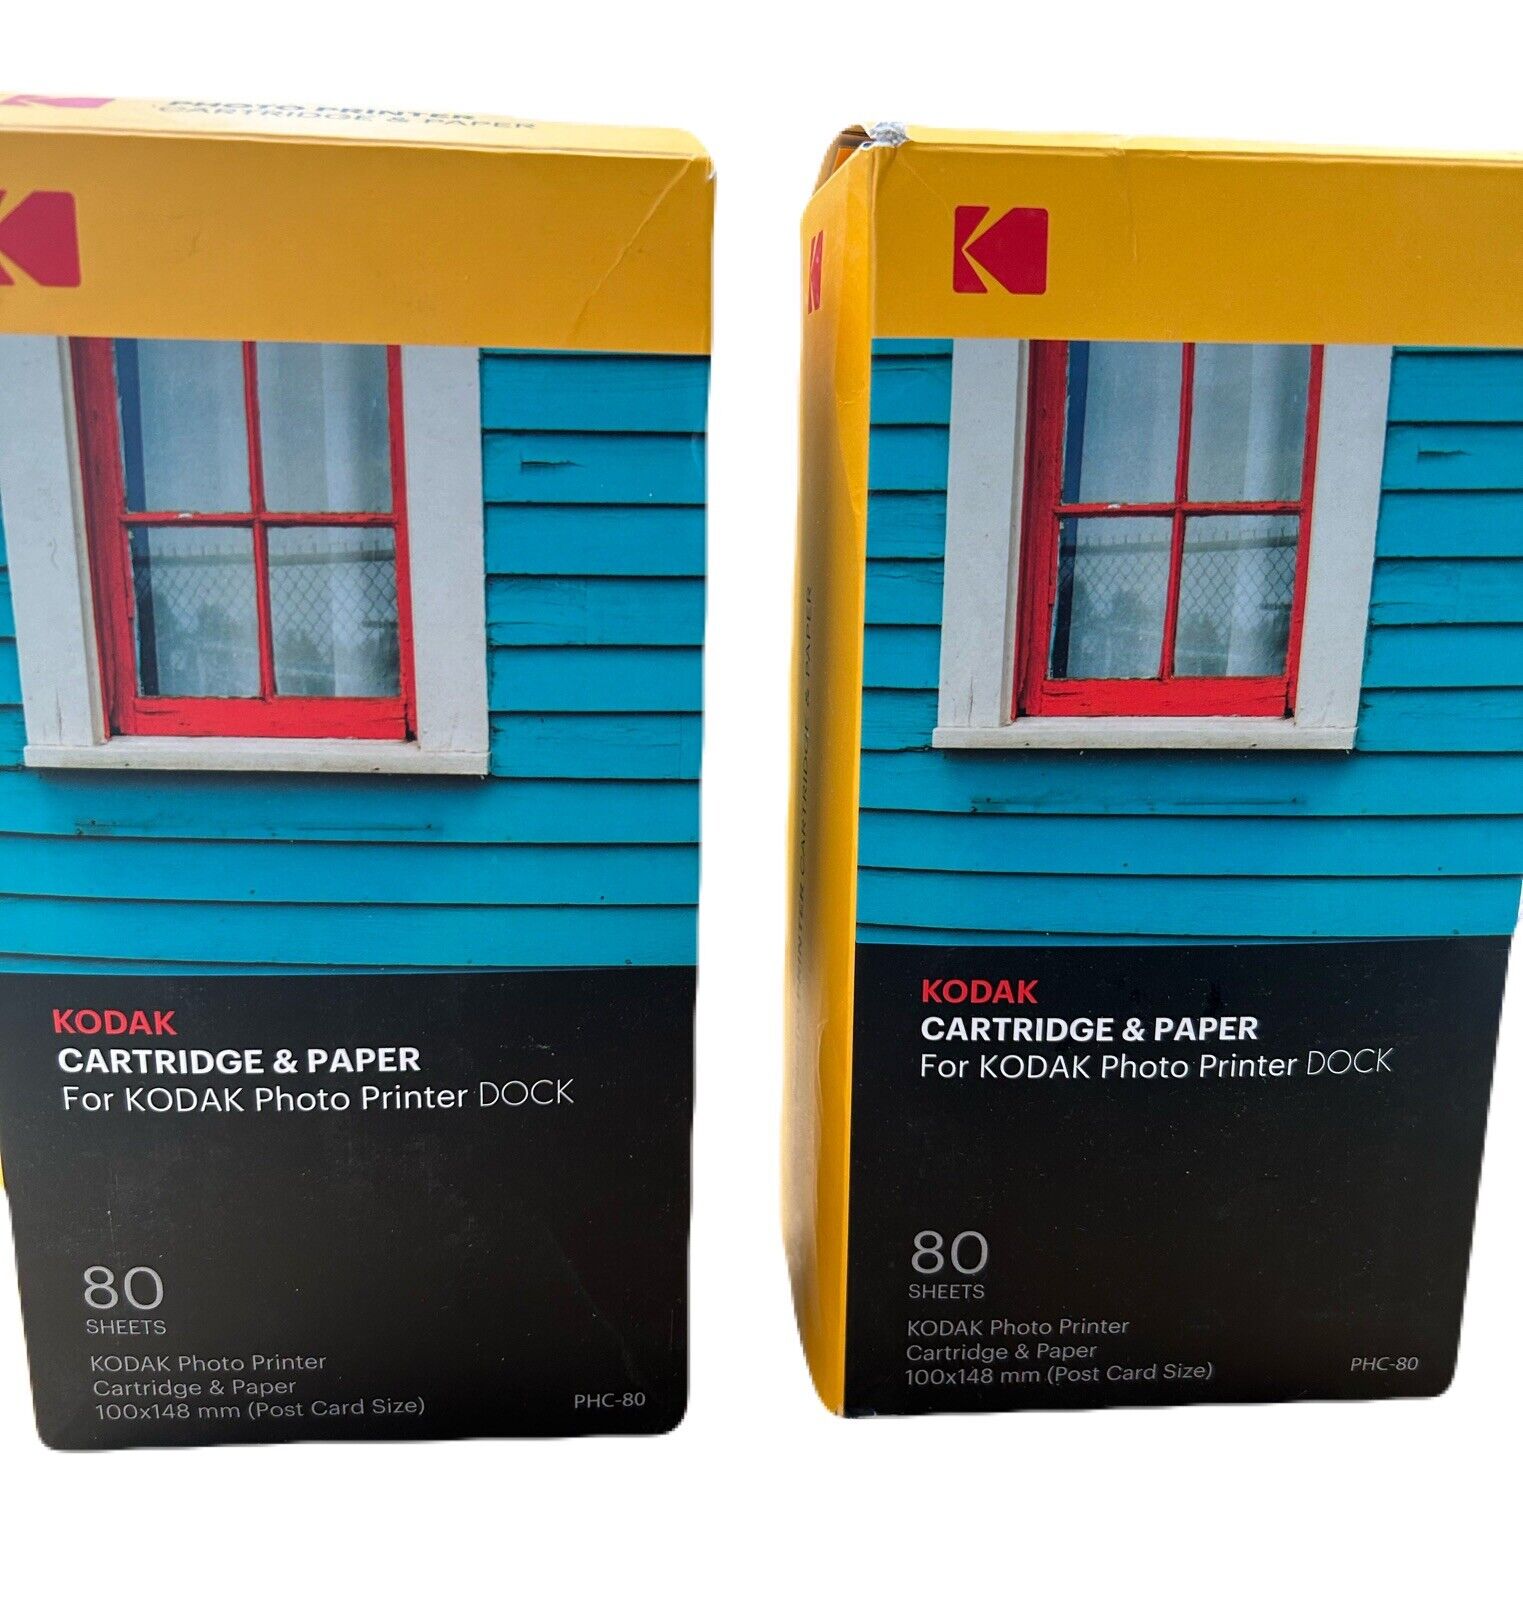 Kodak Cartridge & Paper For Kodak Photo Printer Dock PHC-80 Lot/Set